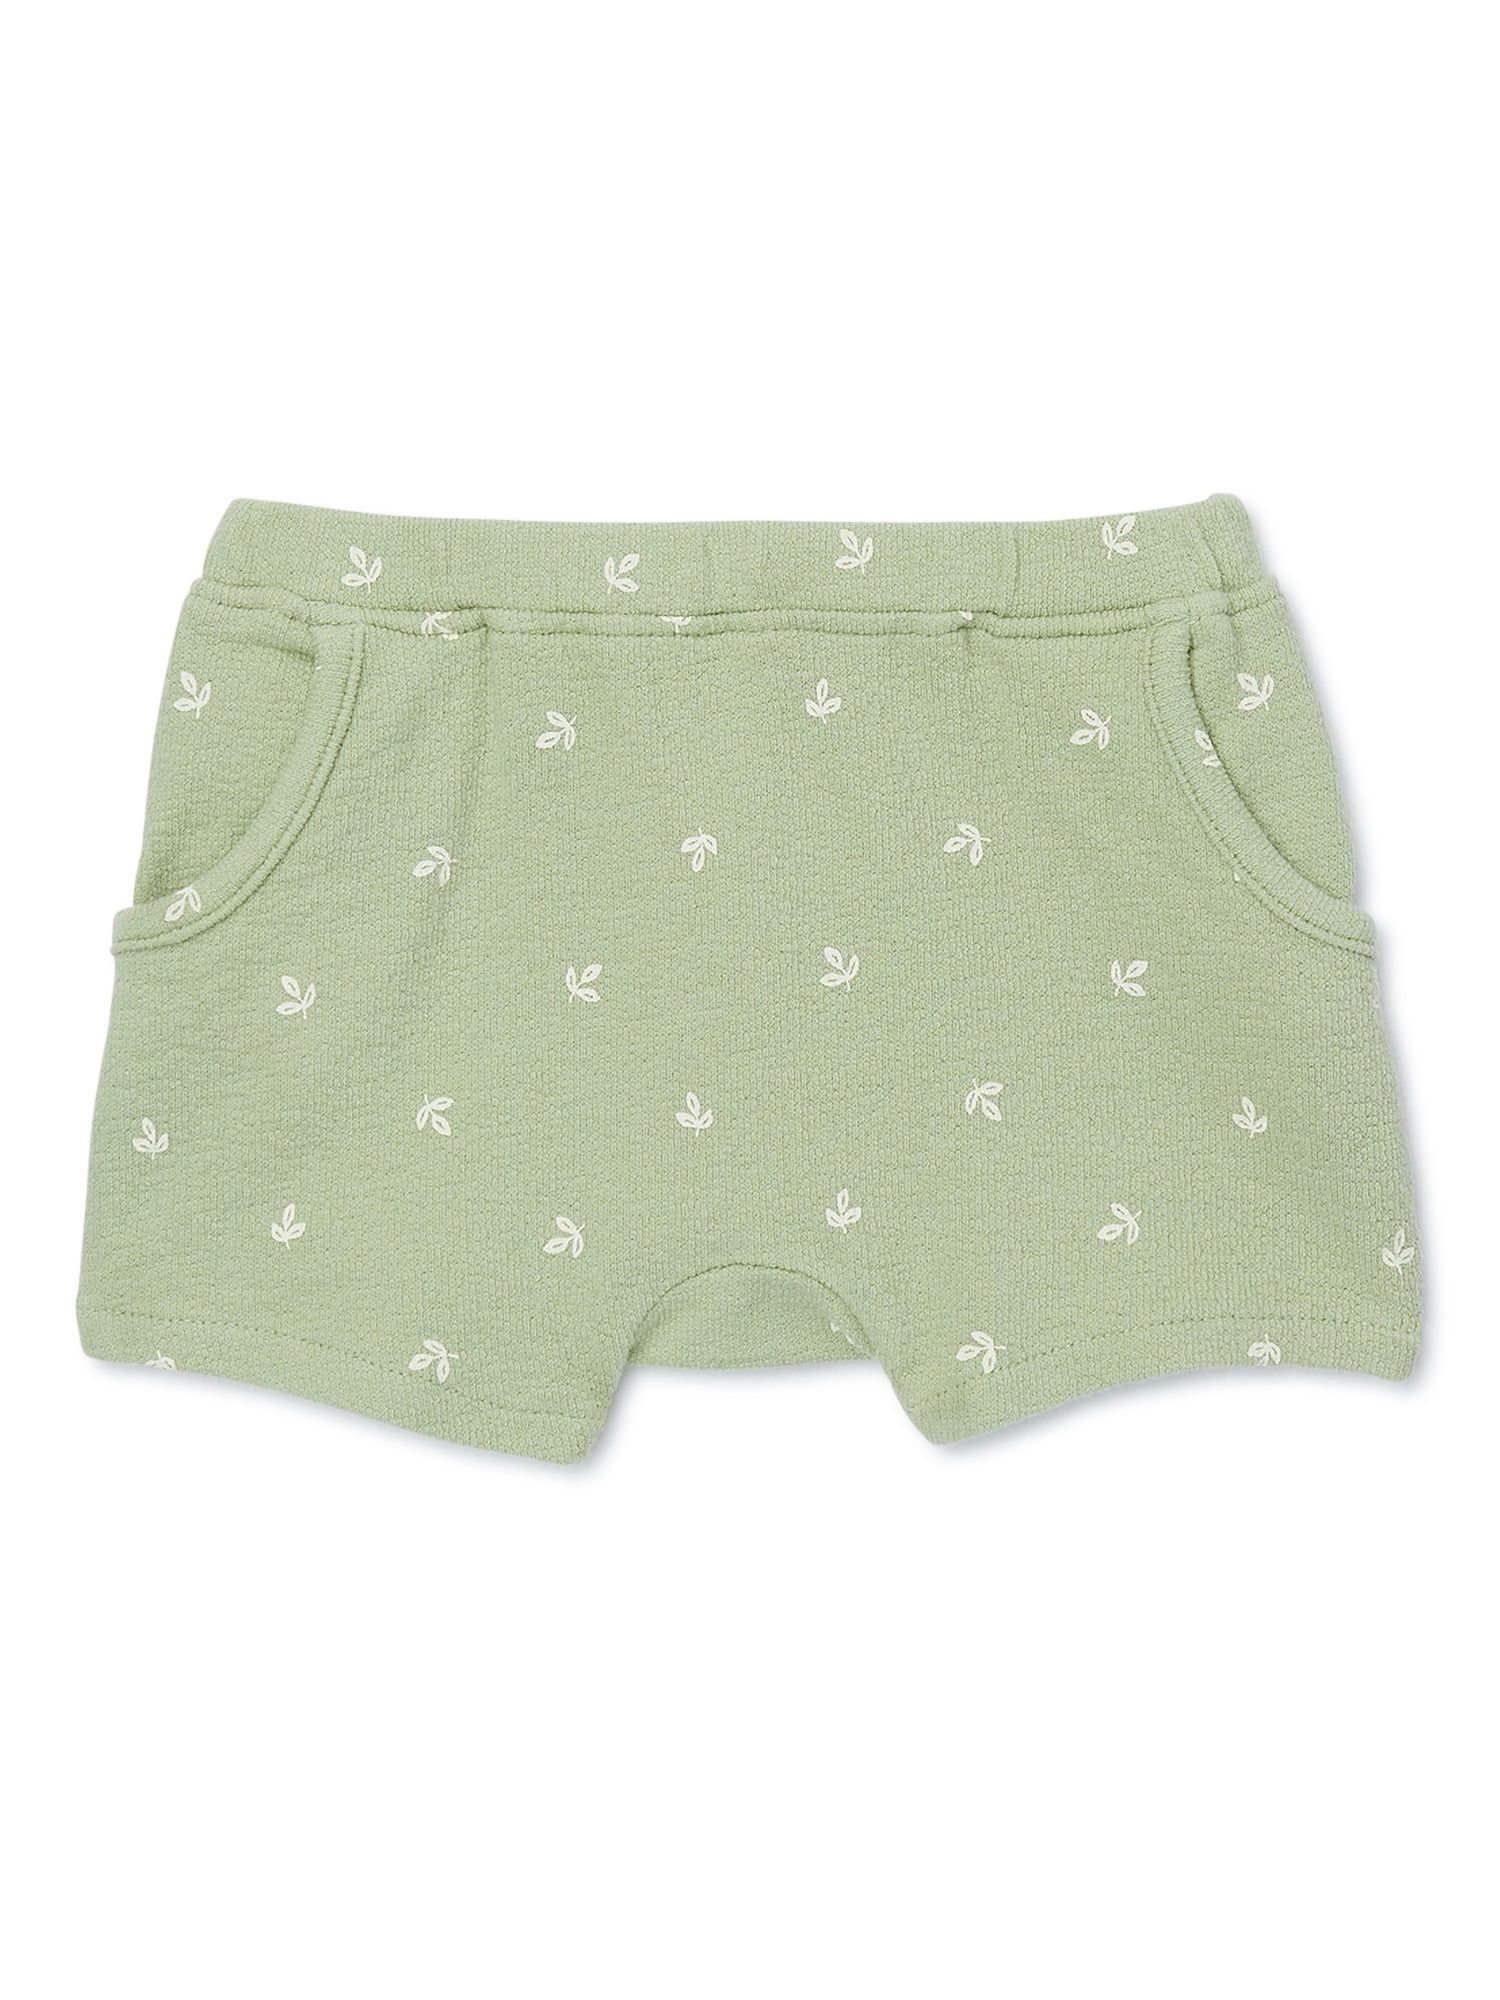 easy-peasy Baby Print Shorts, Sizes 0-24 Months | Walmart (US)